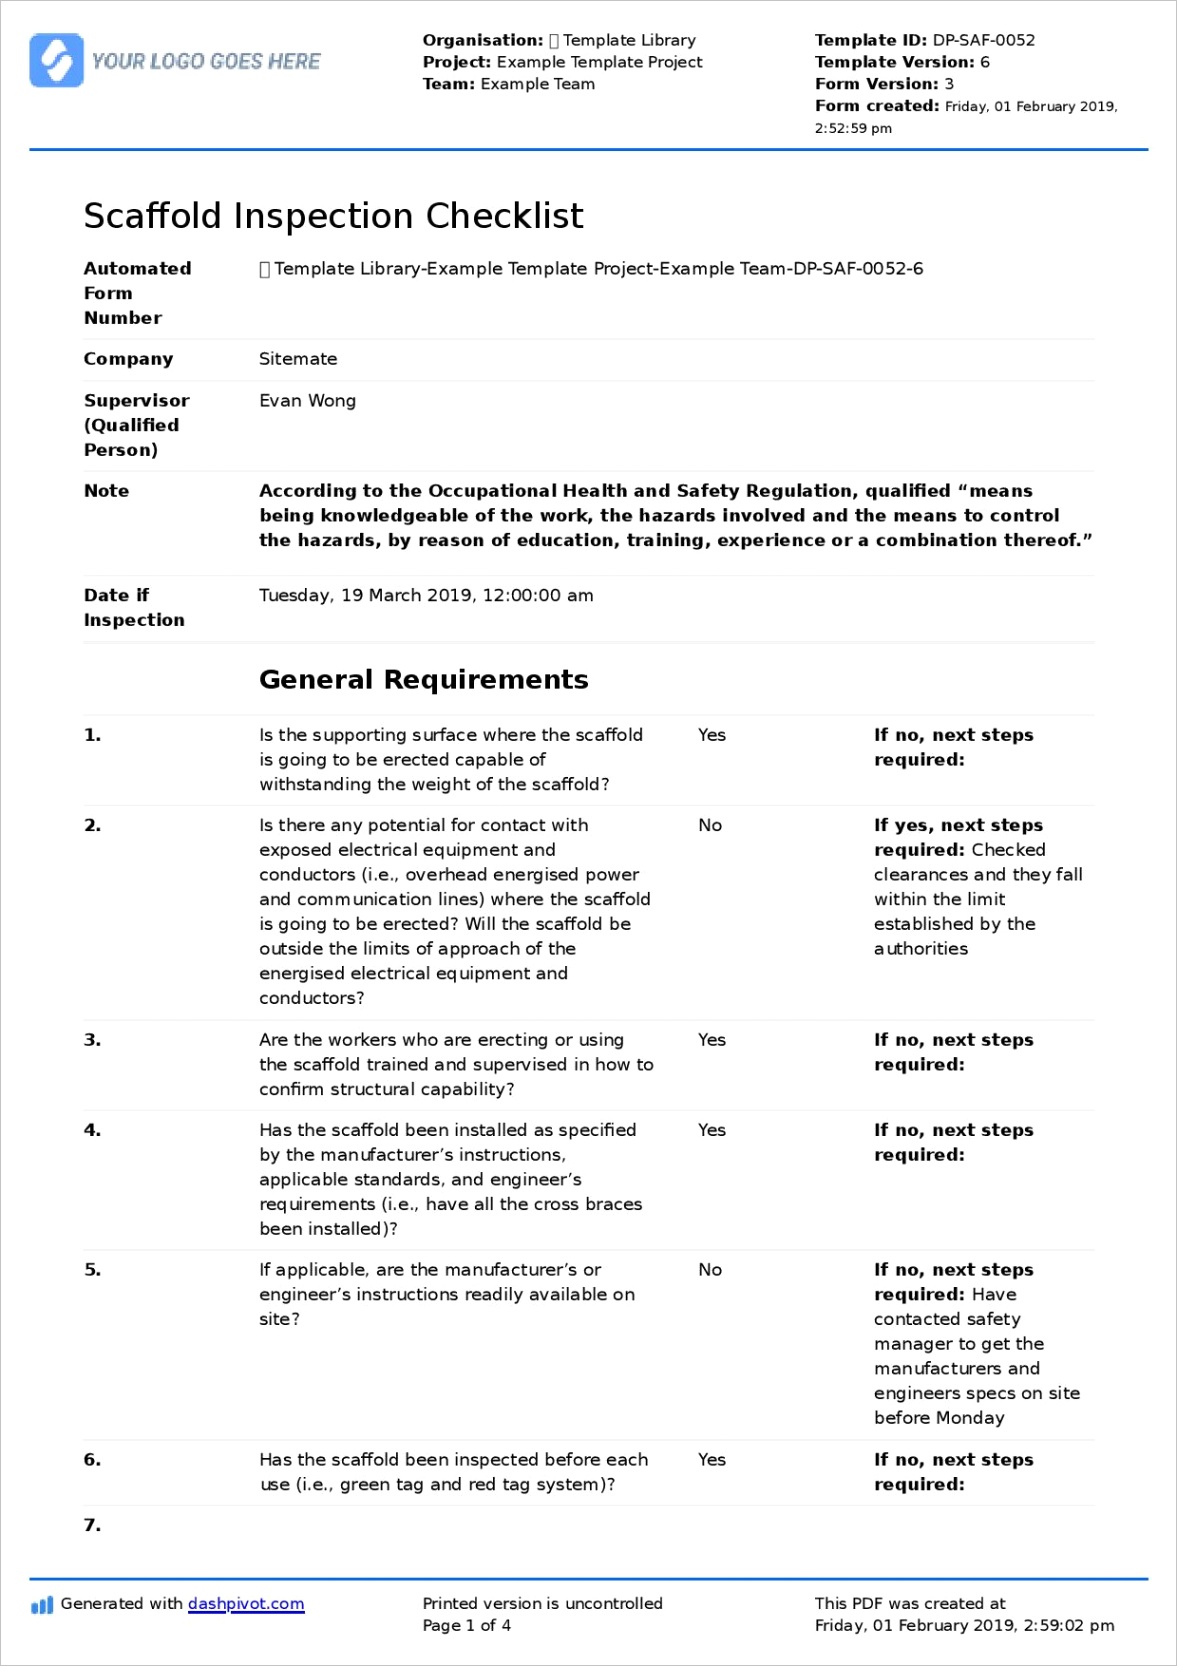 scaffold inspection checklist template